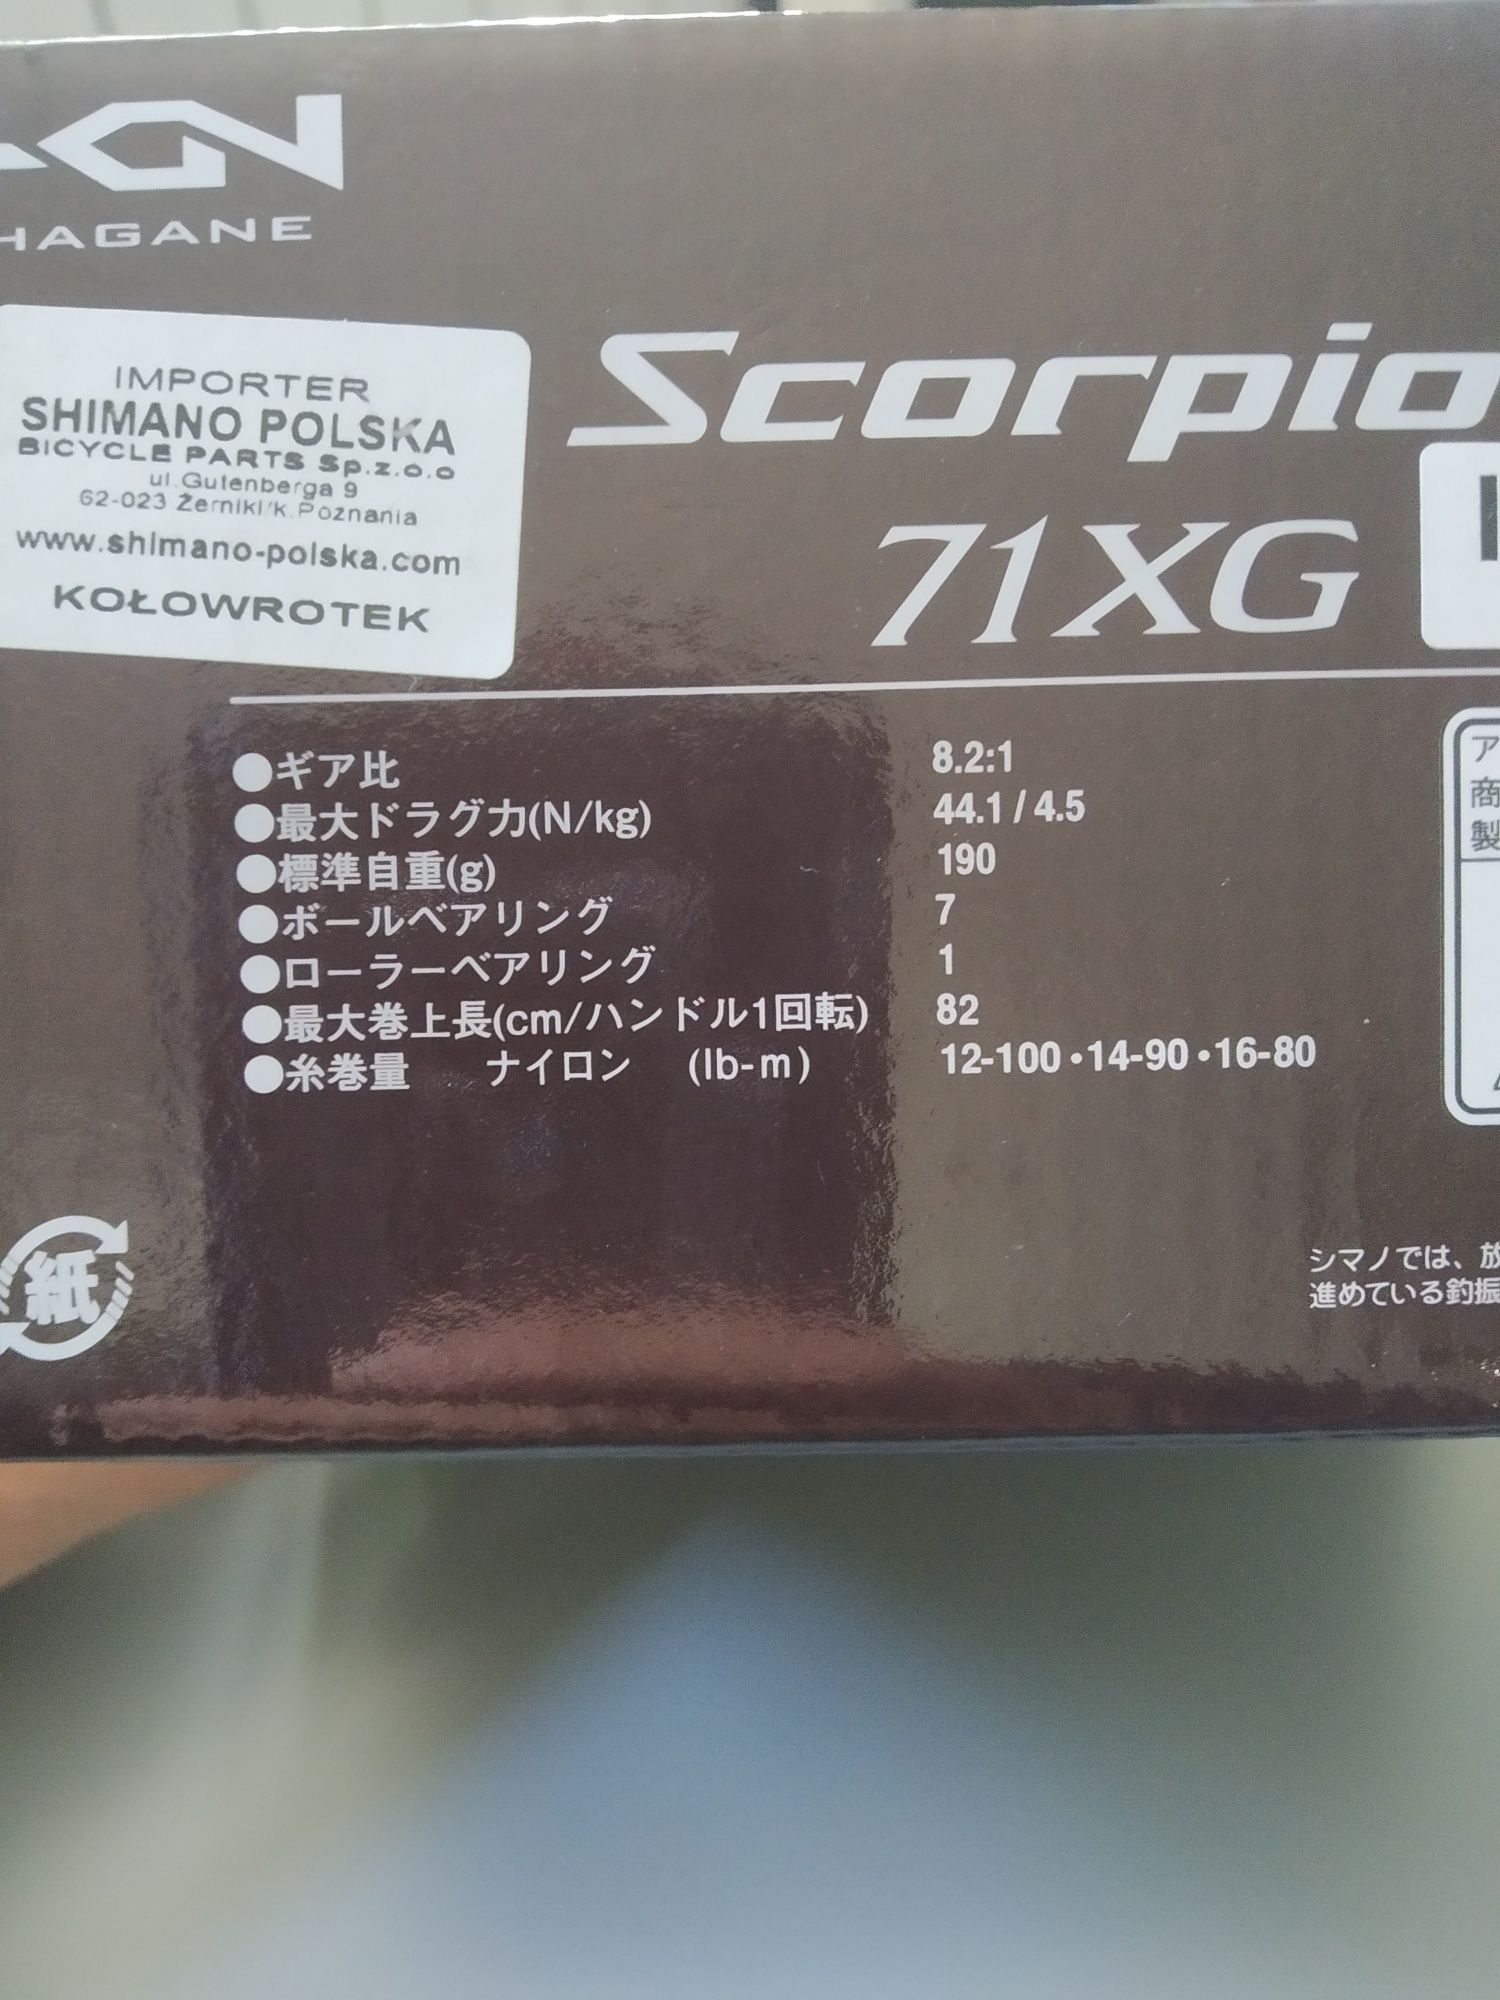 Kołowrotek Multiplikator Shimano Scorpion 71 XG